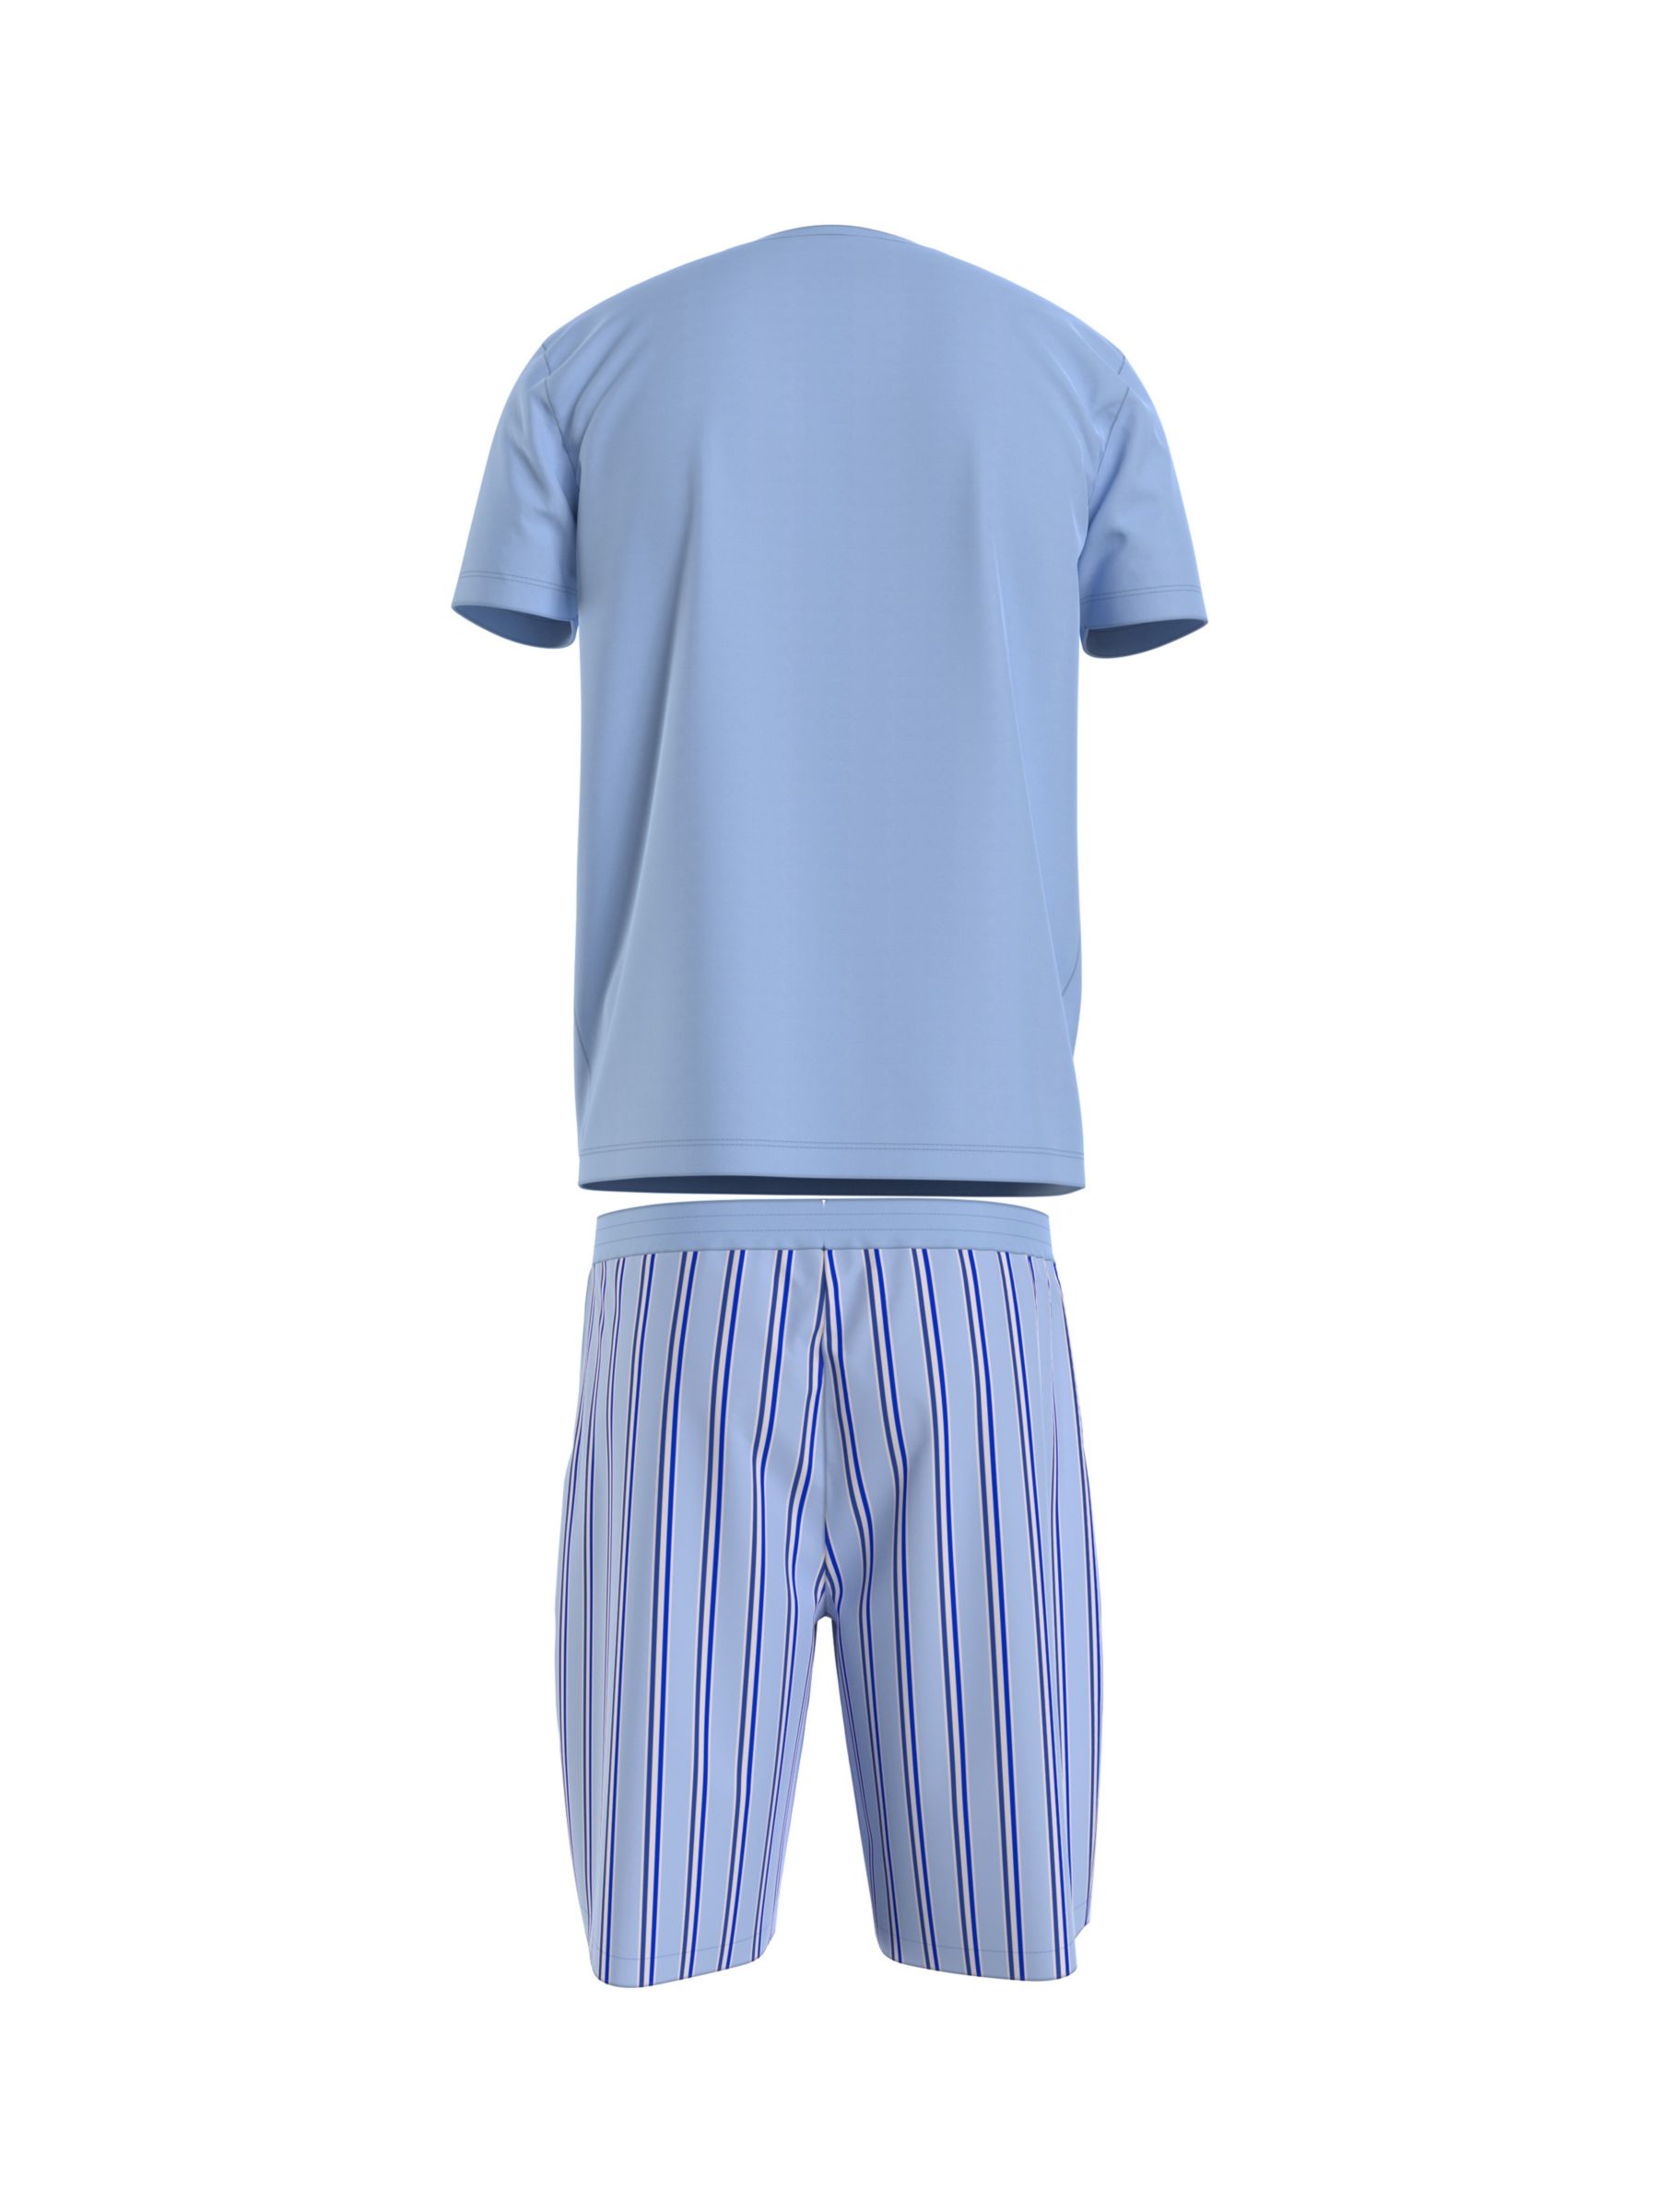 Tommy Hilfiger Woven Pyjama Set, Blue, L